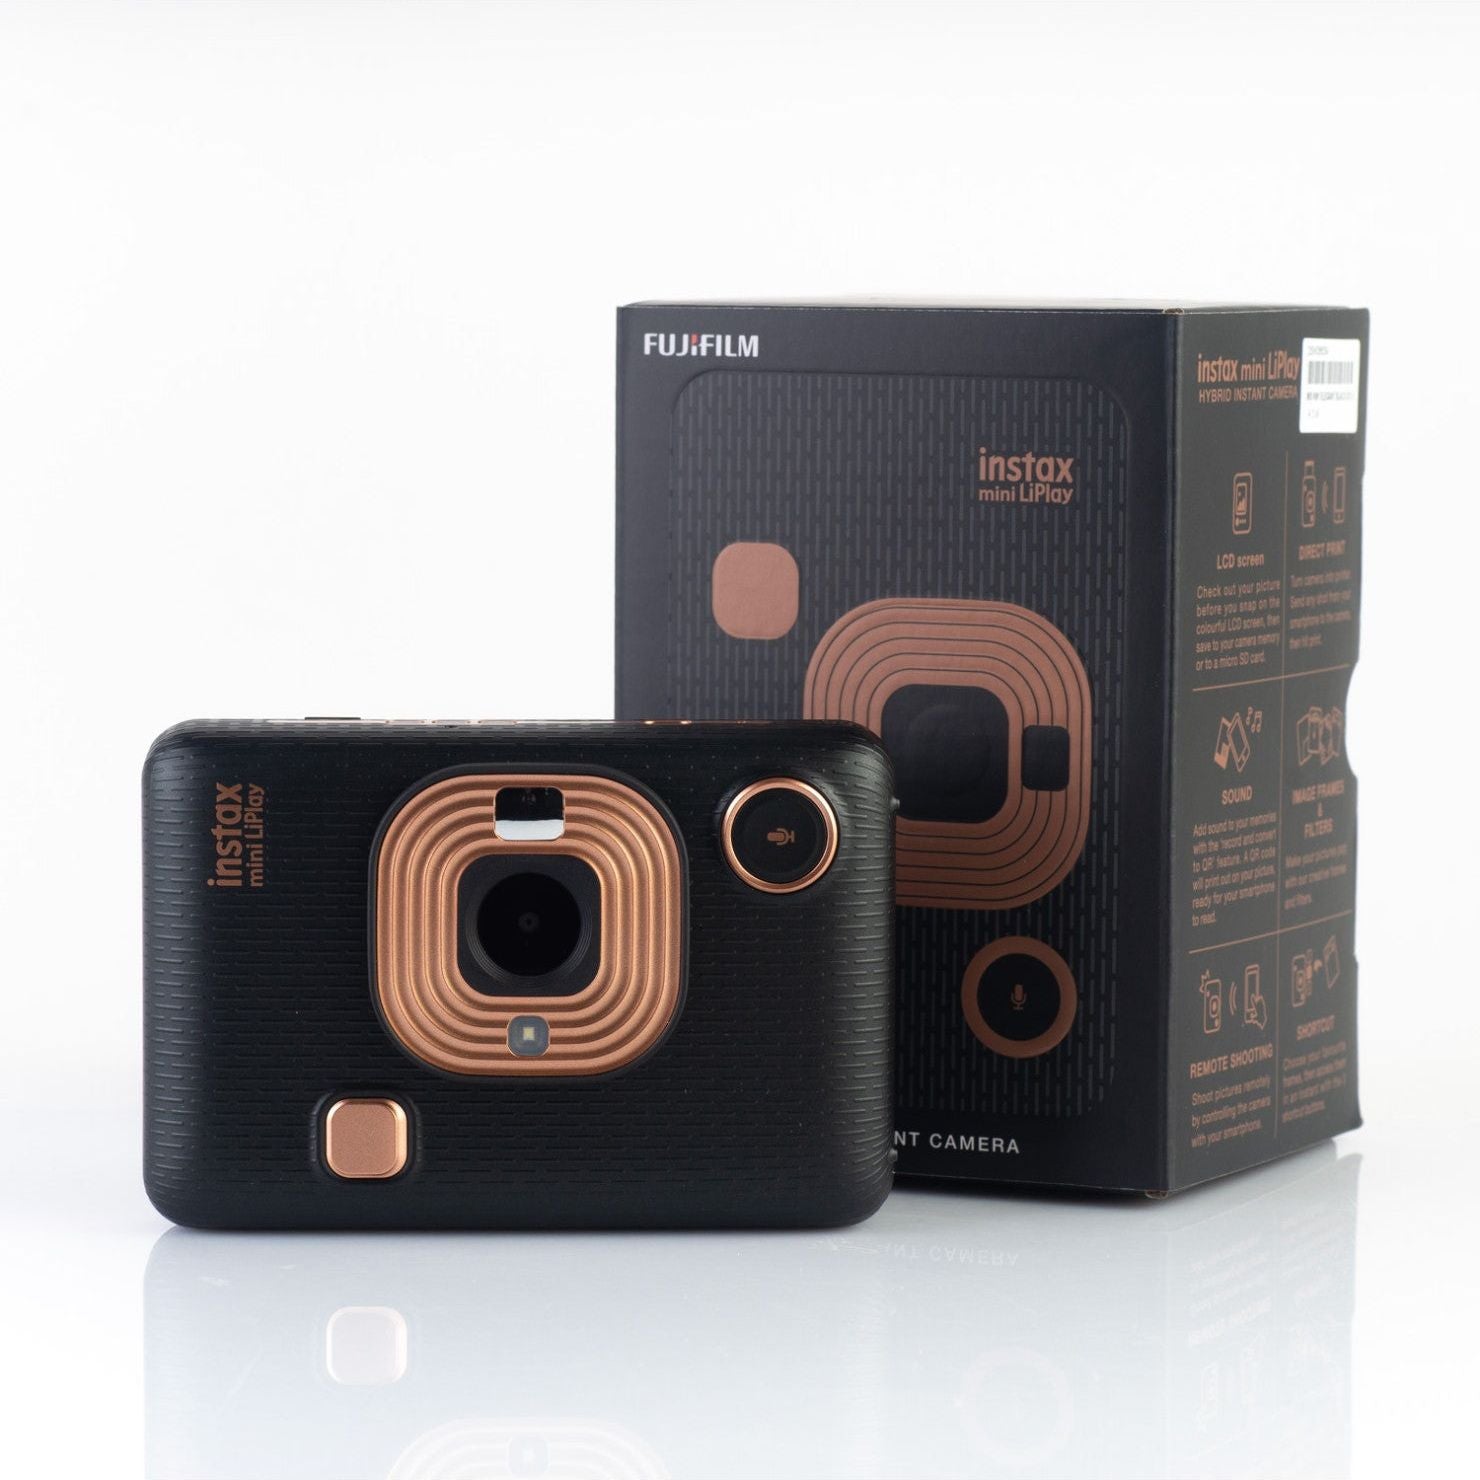 Fujifilm Instax mini LiPlay elegant black